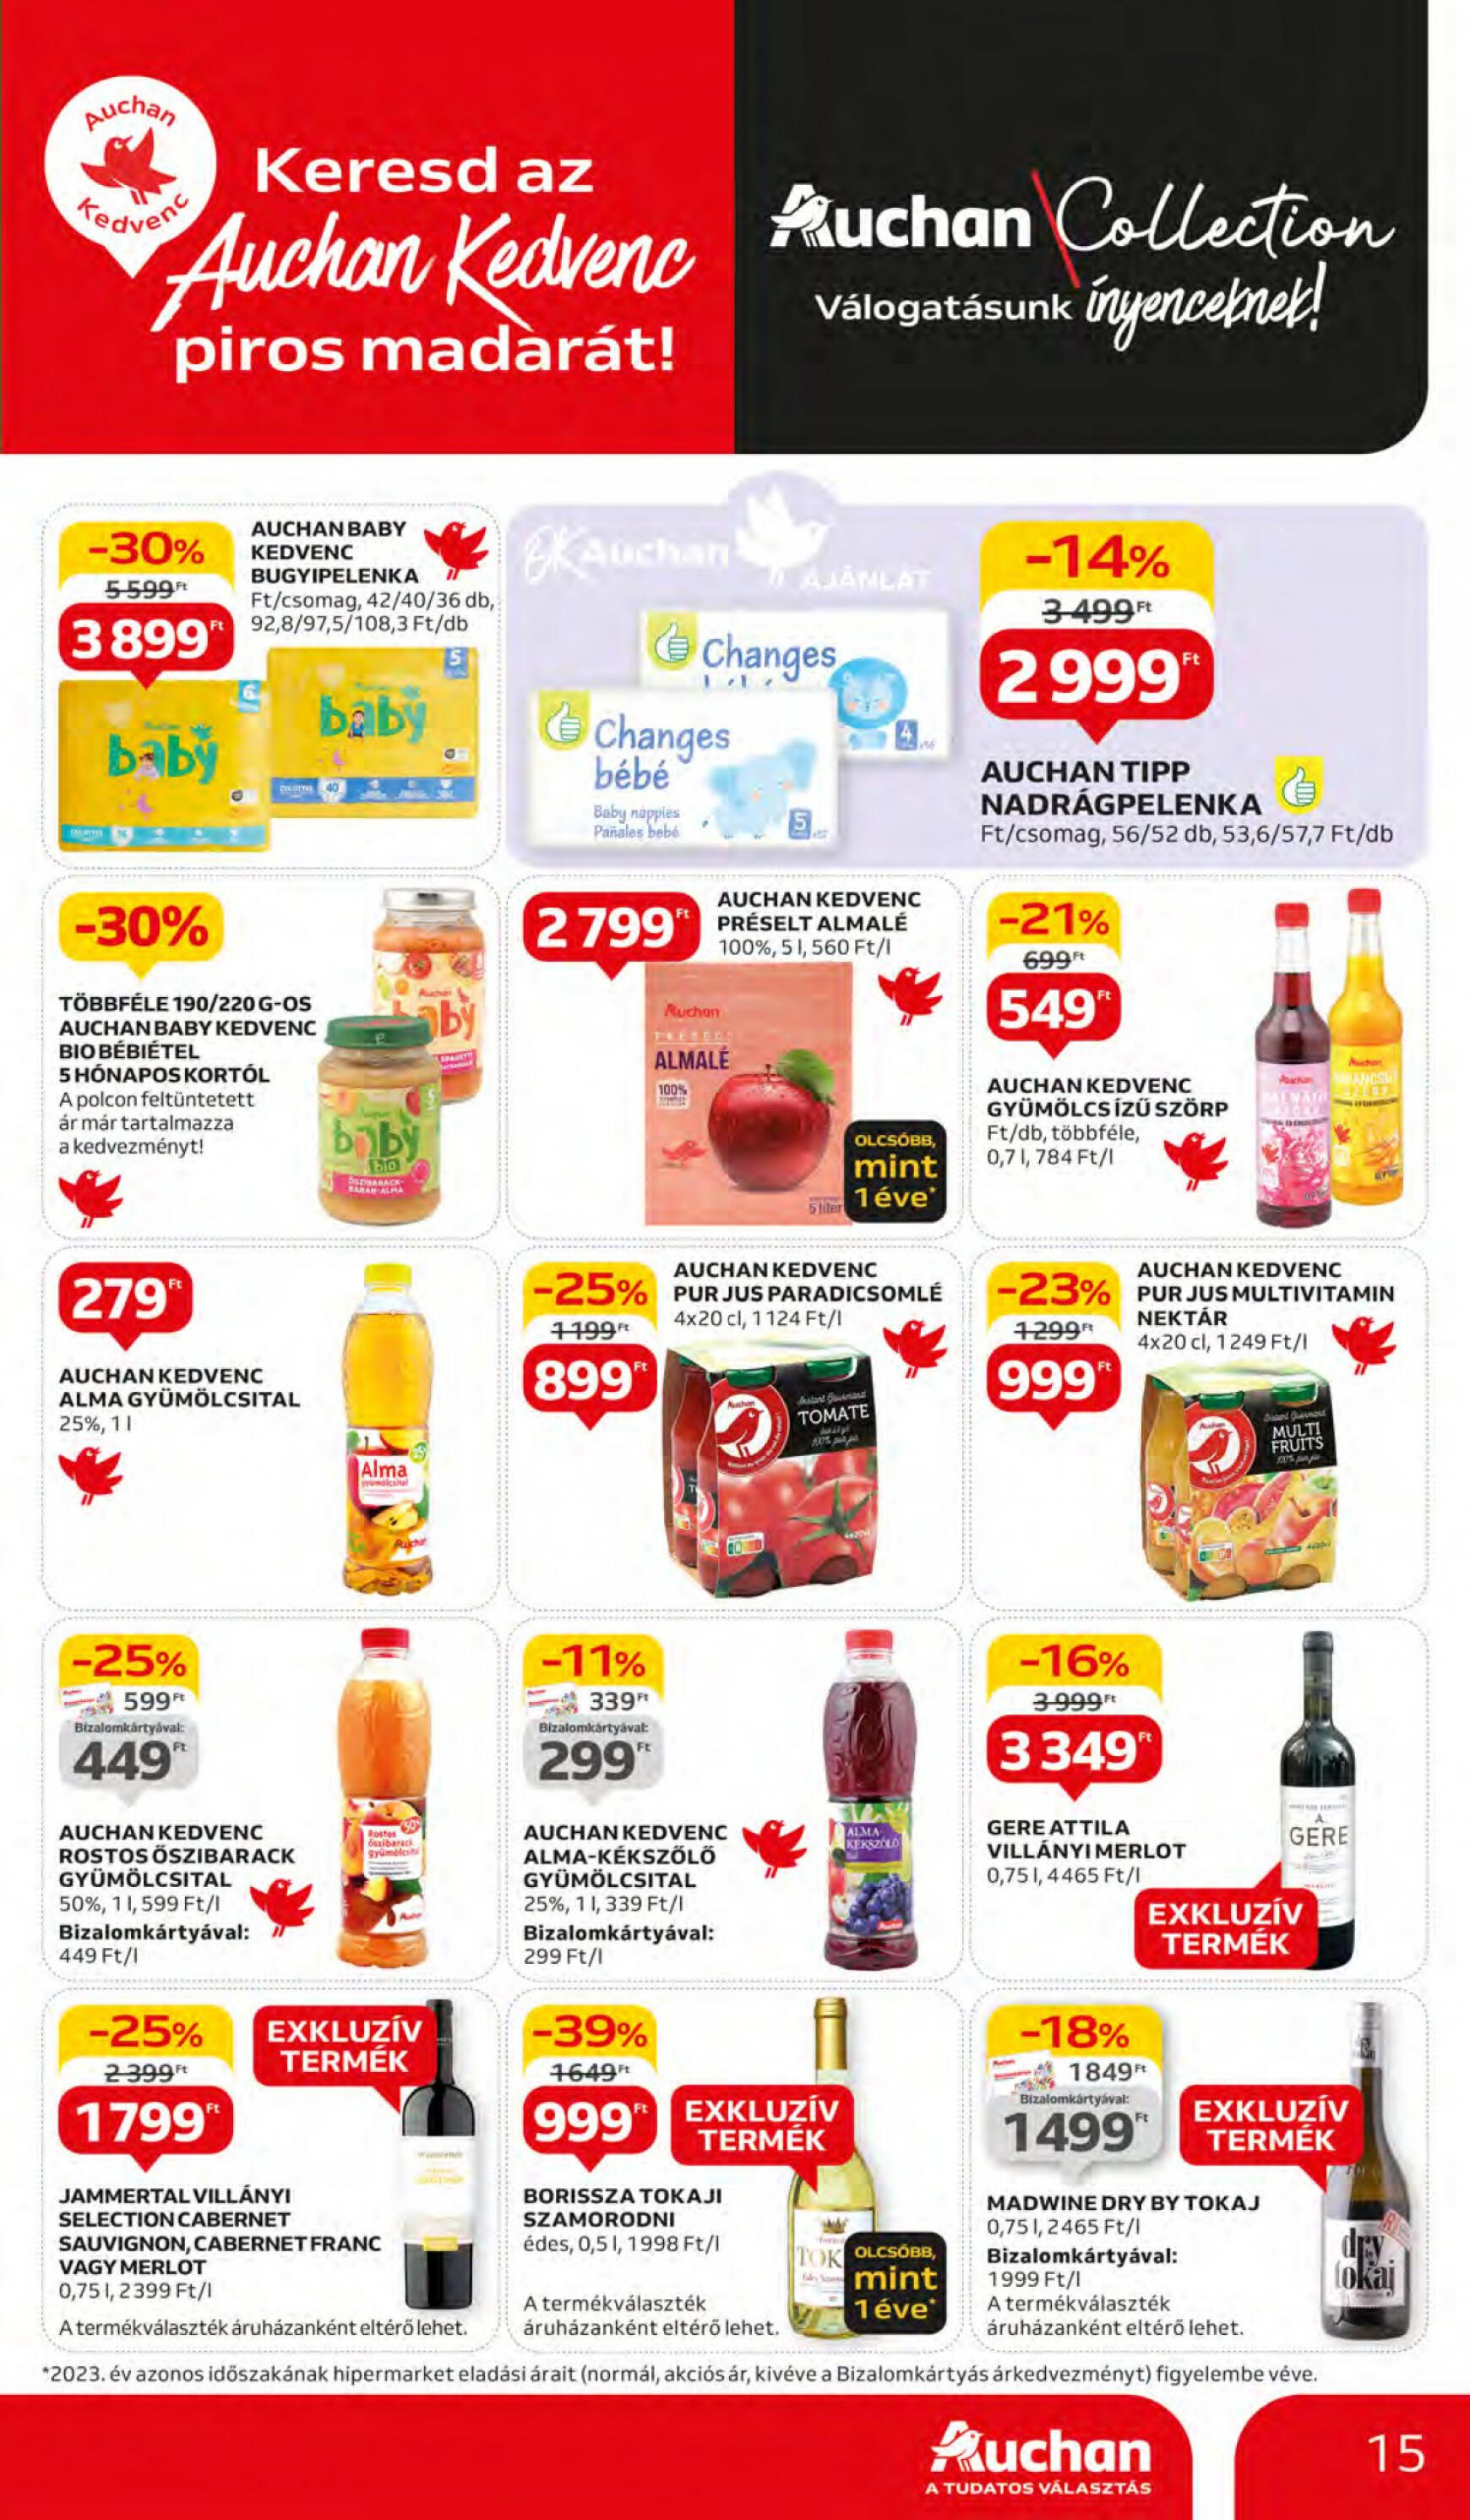 auchan - Aktuális újság Auchan 04.11. - 04.17. - page: 15